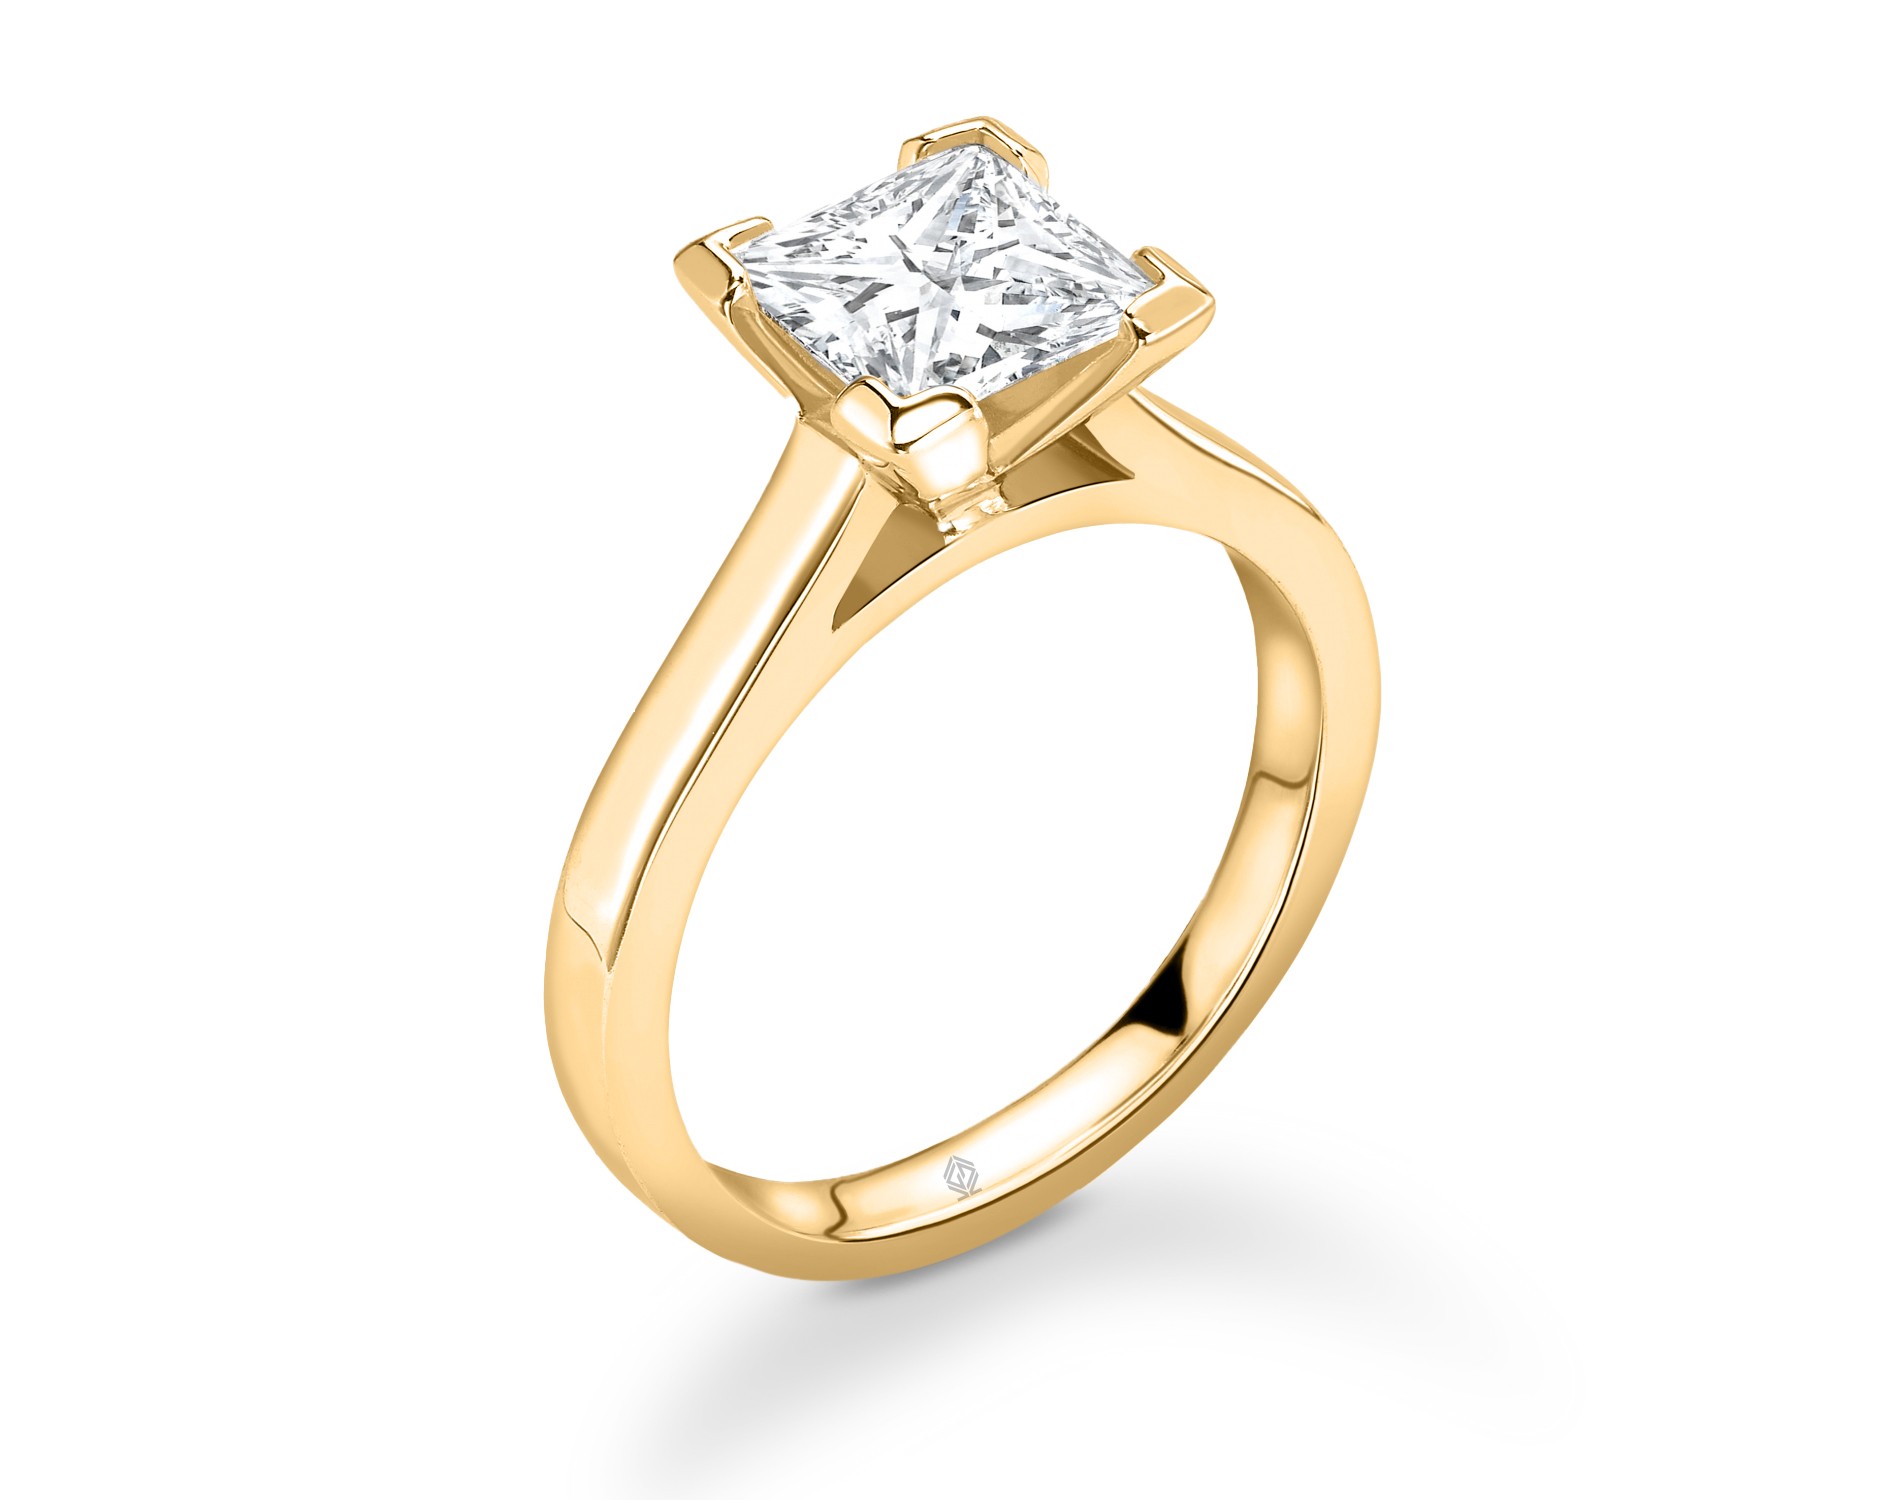 18K YELLOW GOLD 4 PRONGS SOLITAIRE PRINCESS CUT DIAMOND ENGAGEMENT RING